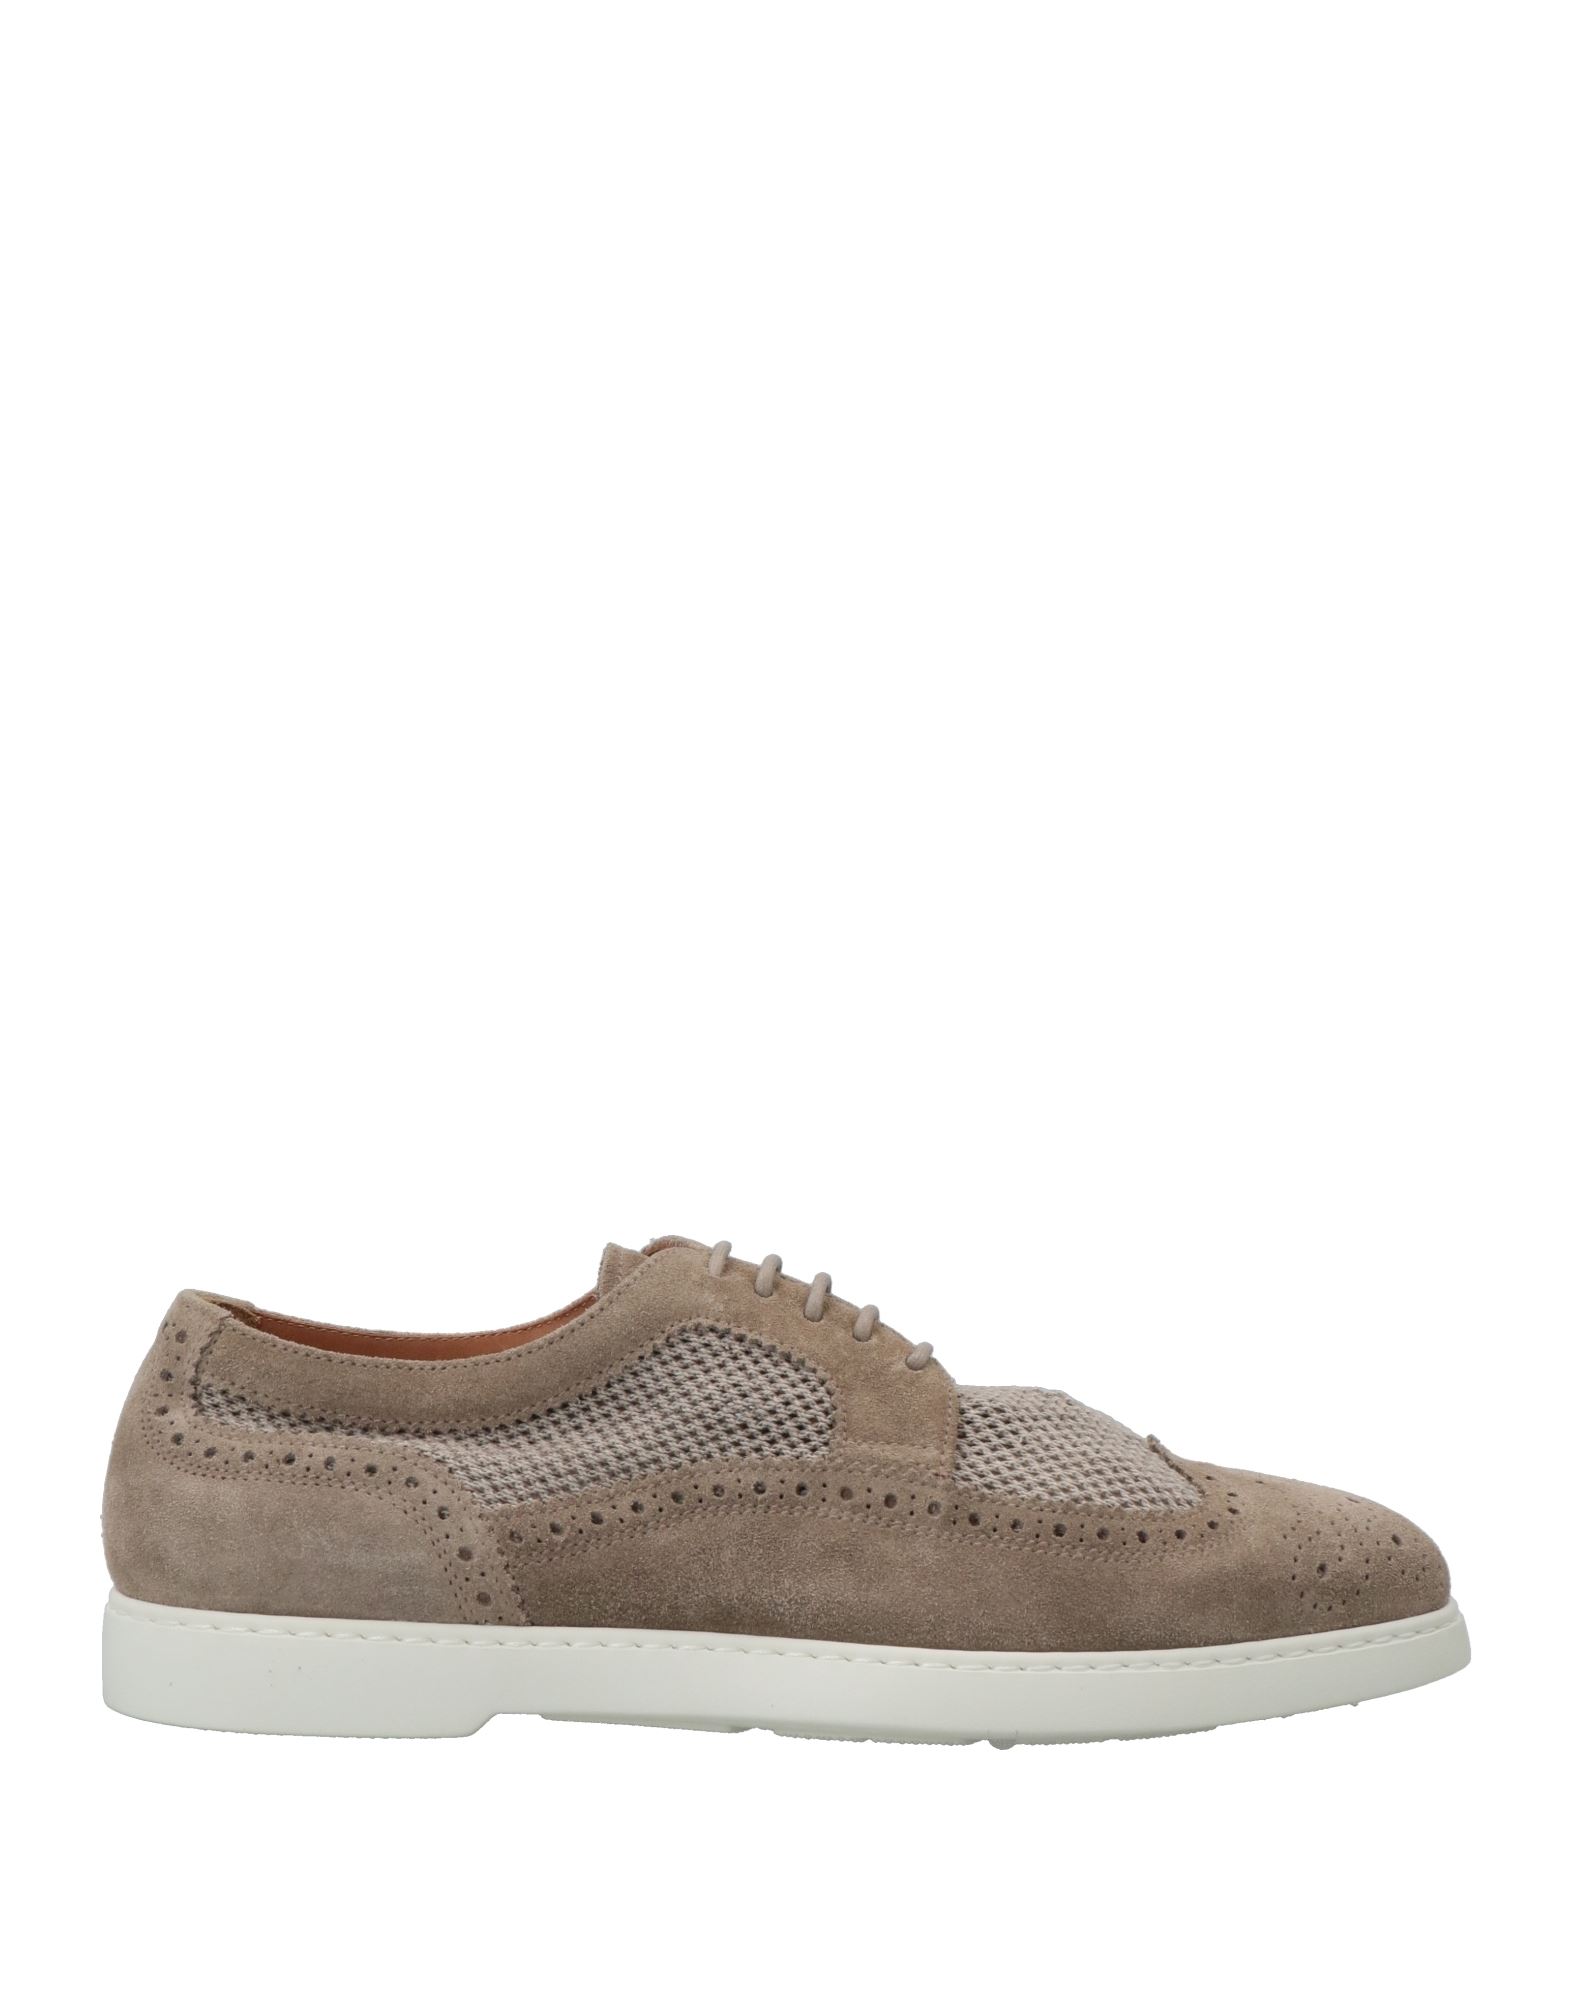 Doucal's Man Lace-up Shoes Dove Grey Size 8 Soft Leather, Textile Fibers